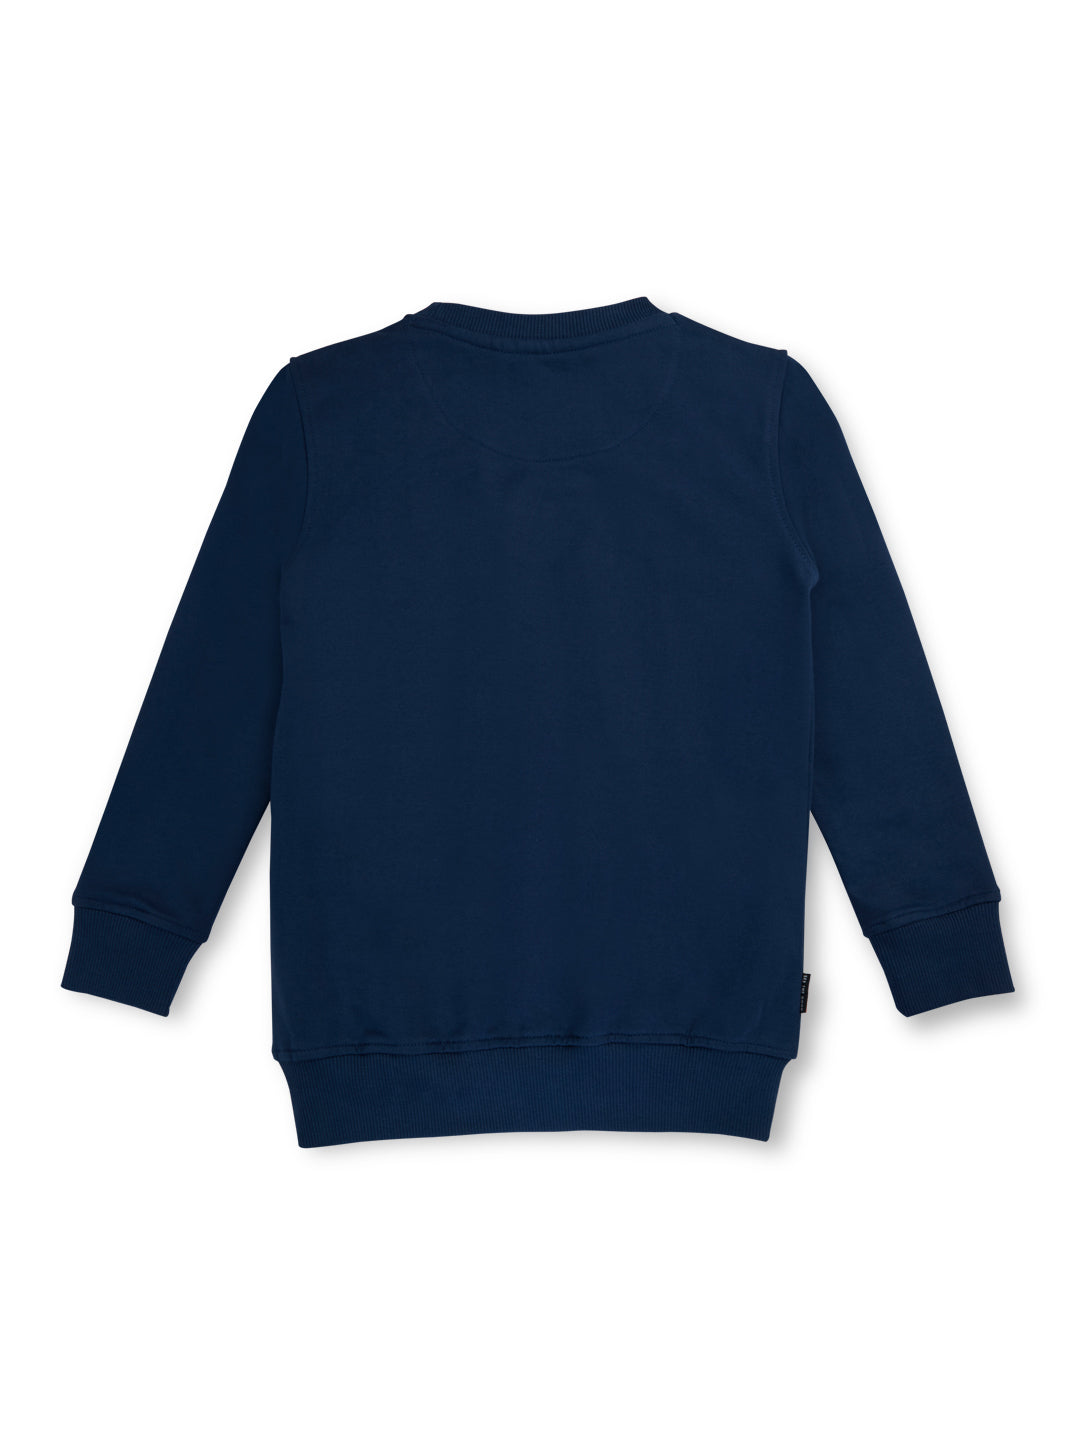 Boys Navy Blue Printed Fleece Sweat Shirt Full Sleeves